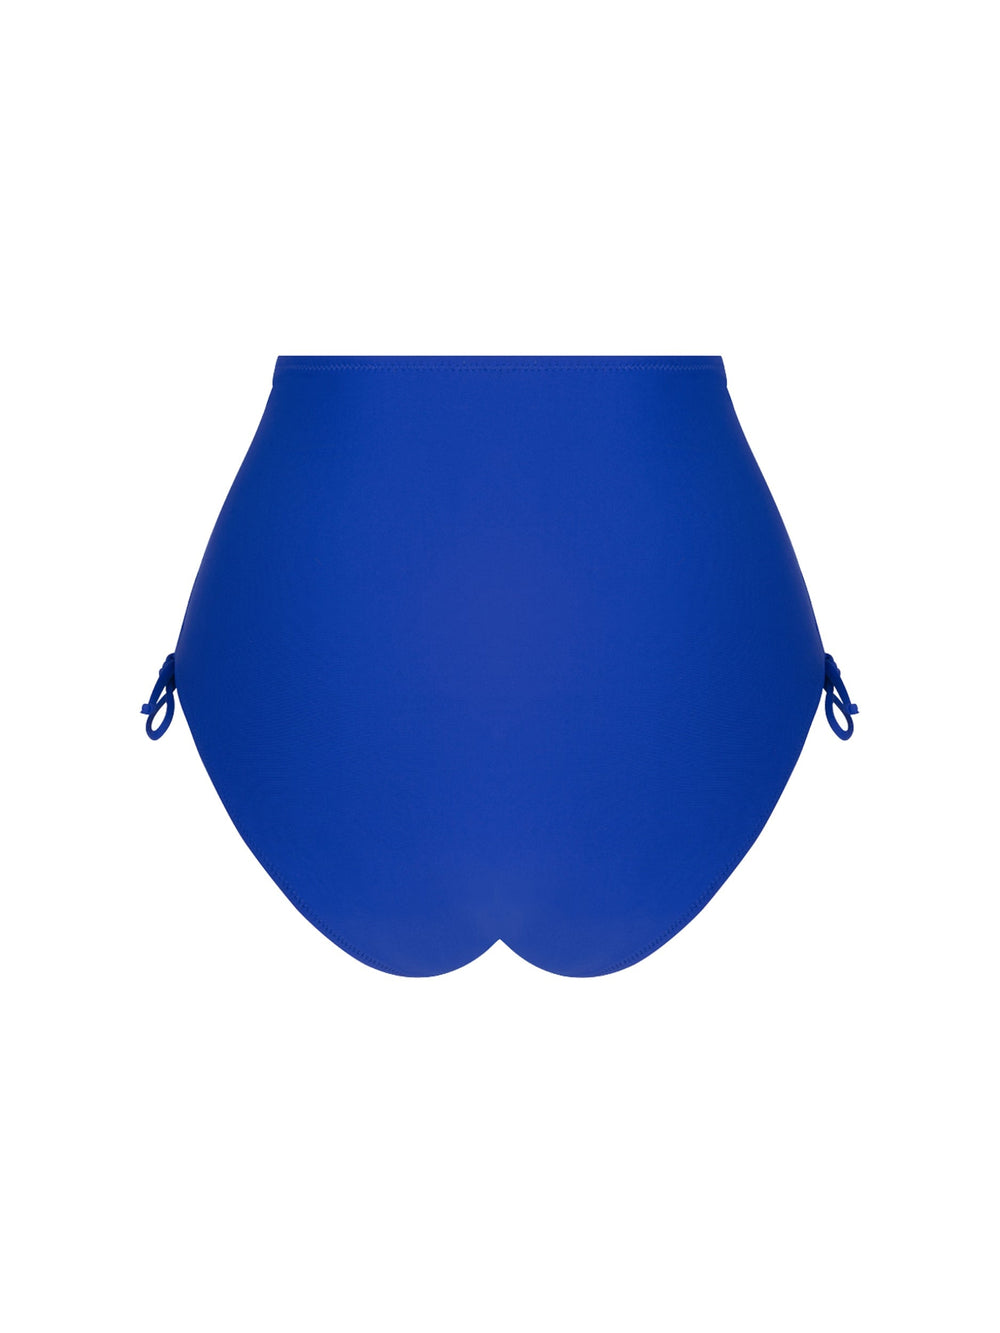 Antigel by Lise Charmel - La Chiquissima High Waist Bikini Bottom Electric Full Bikini Brief Antigel by Lise Charmel Swimwear 